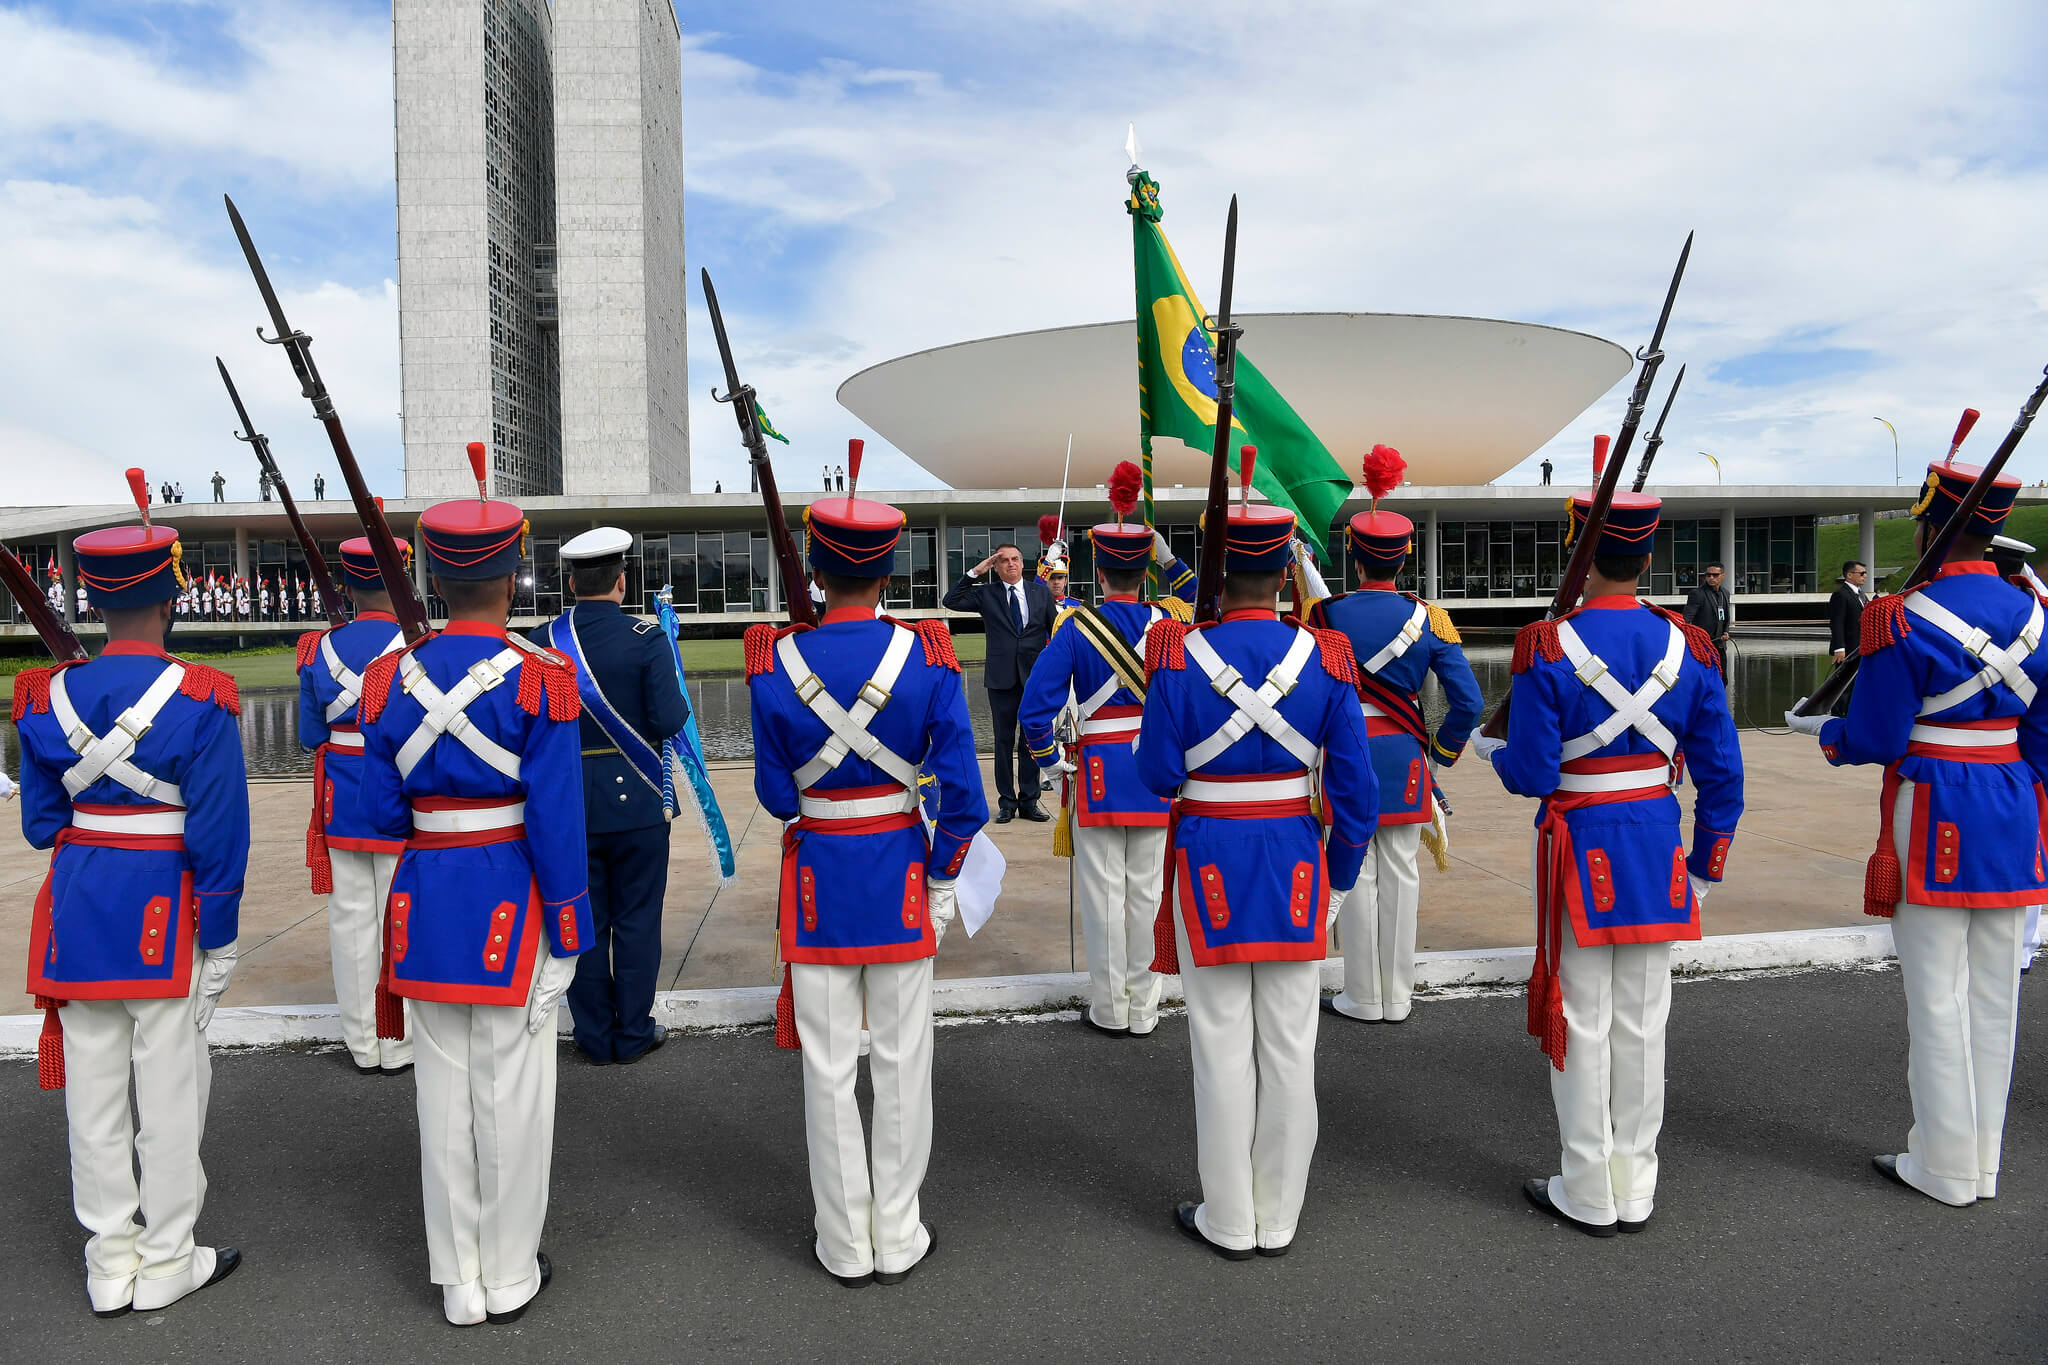 inauguration of president Bolsonaro